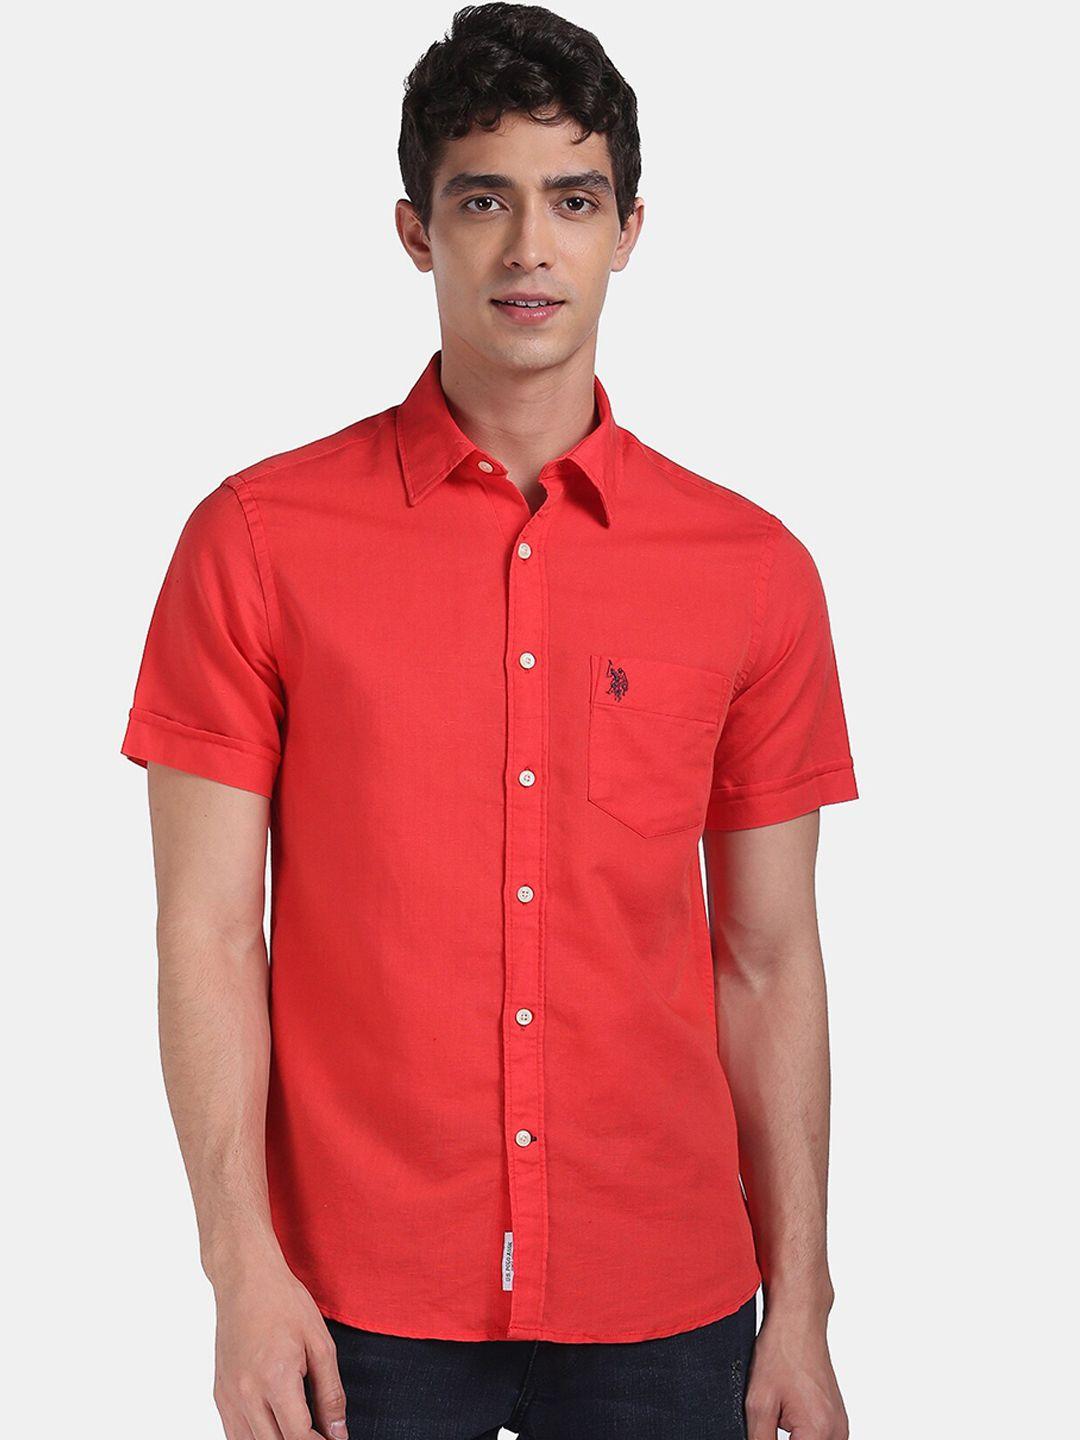 u.s. polo assn. men red regular fit solid casual shirt